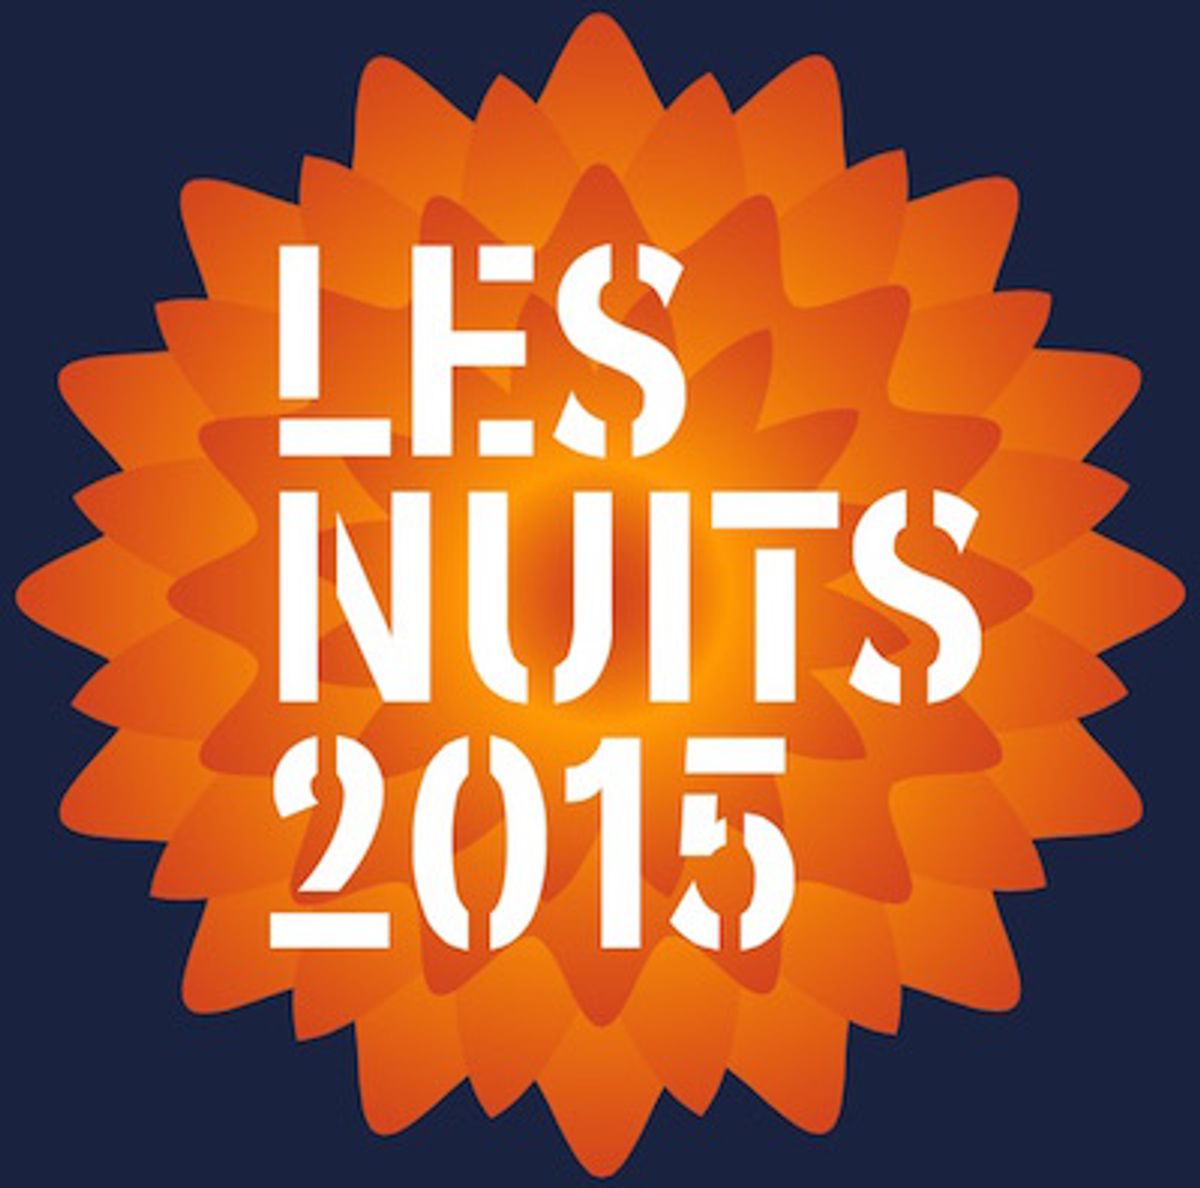 Les Nuits 2015 - Concertgids special (1)